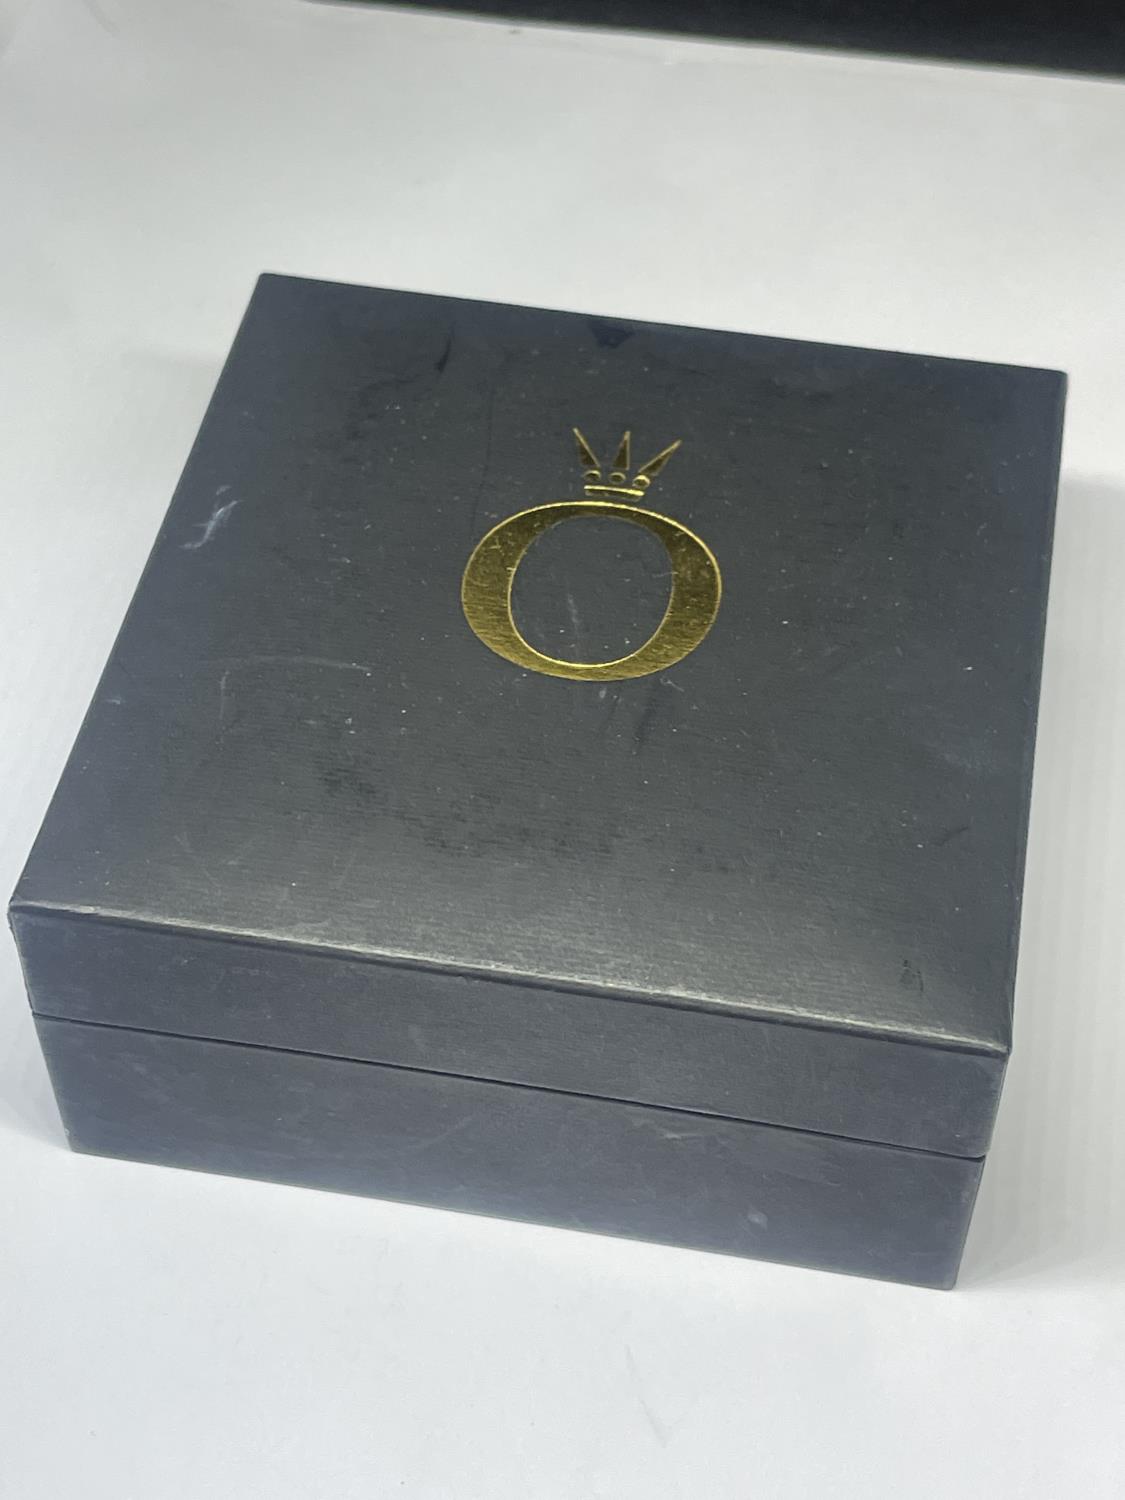 A SILVER PANDORA BRACELET IN A PRESENTATION BOX - Image 3 of 3